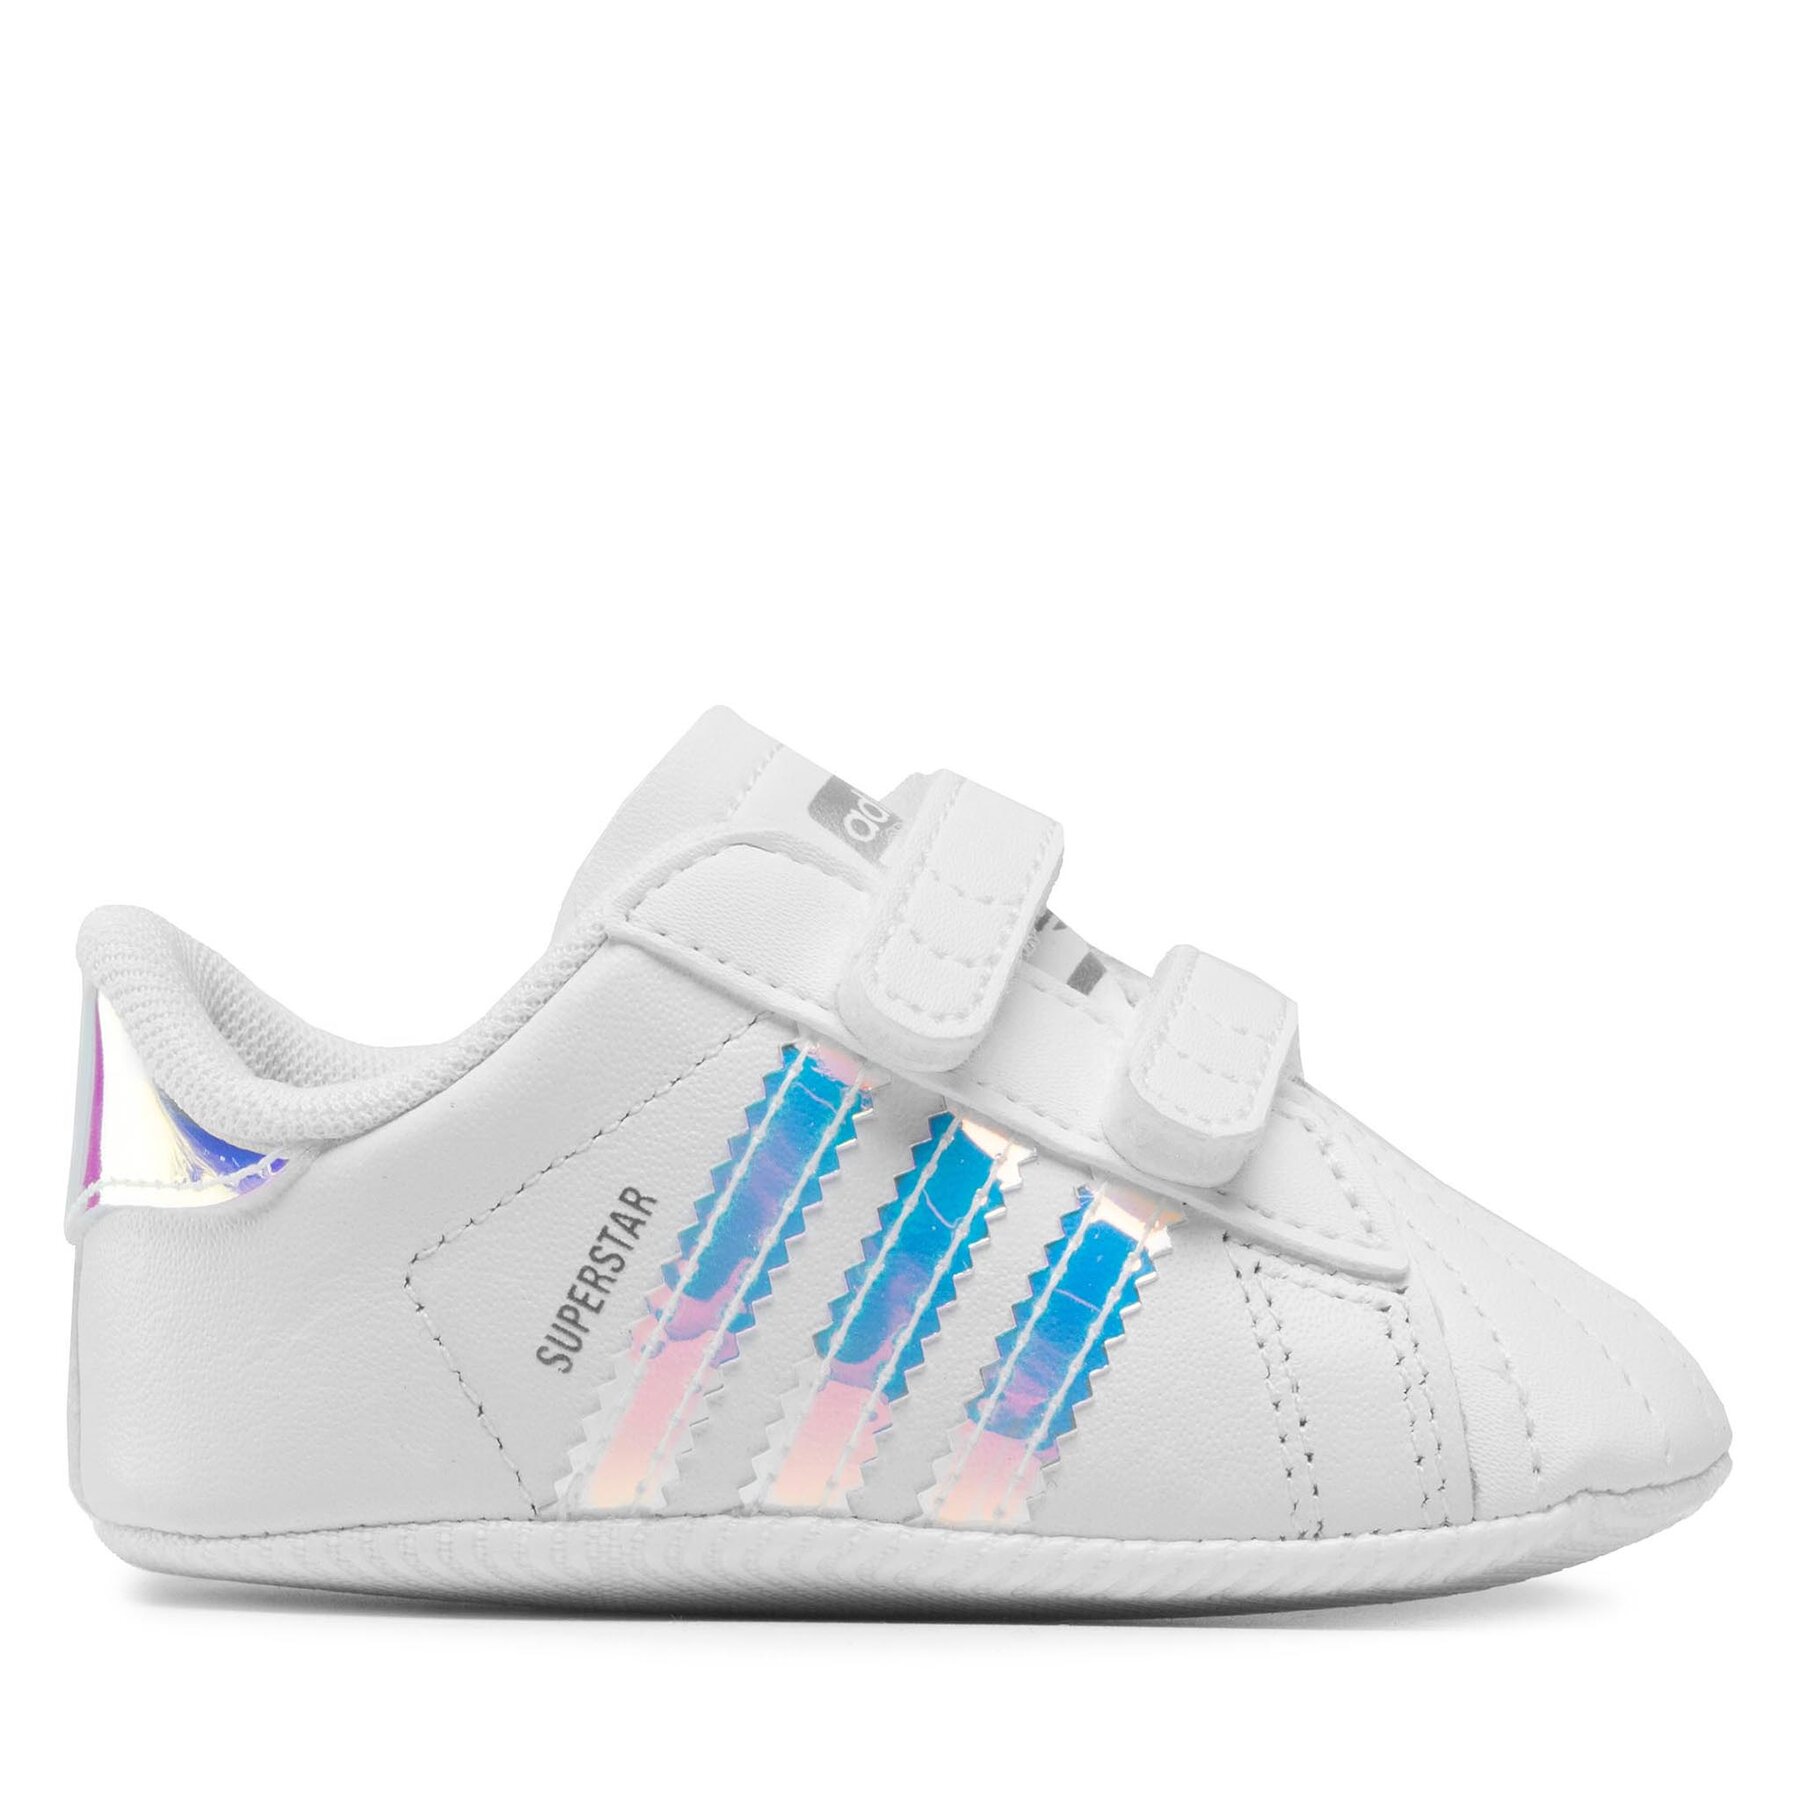 Comprar en oferta Adidas Superstar Baby white/core black/white